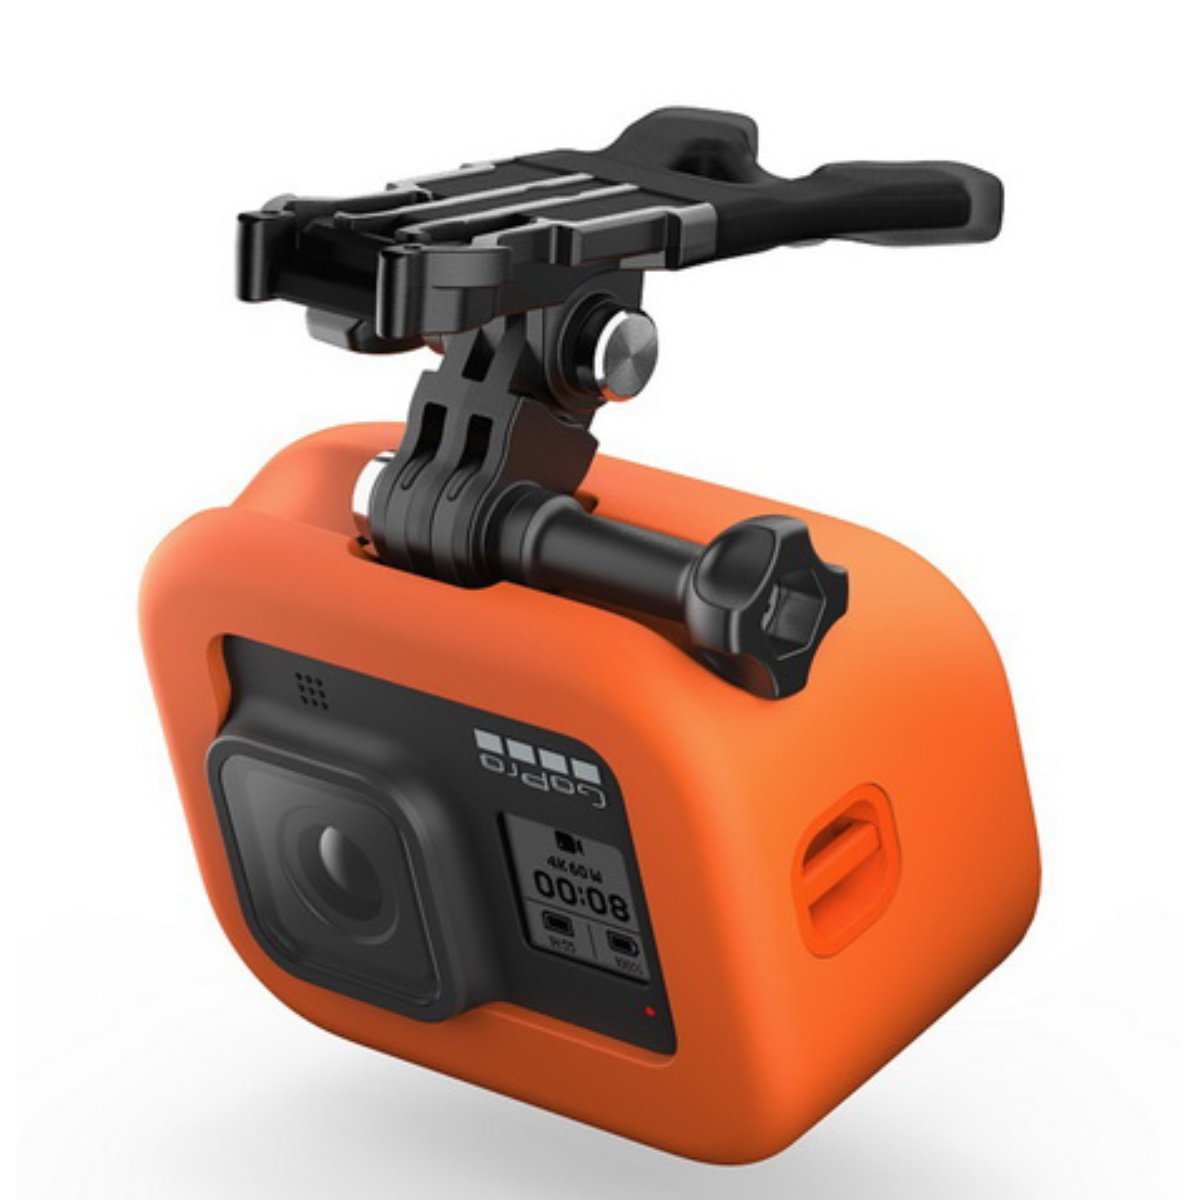 GoPro Video Equipment (Black/Orange) ASLBM-002